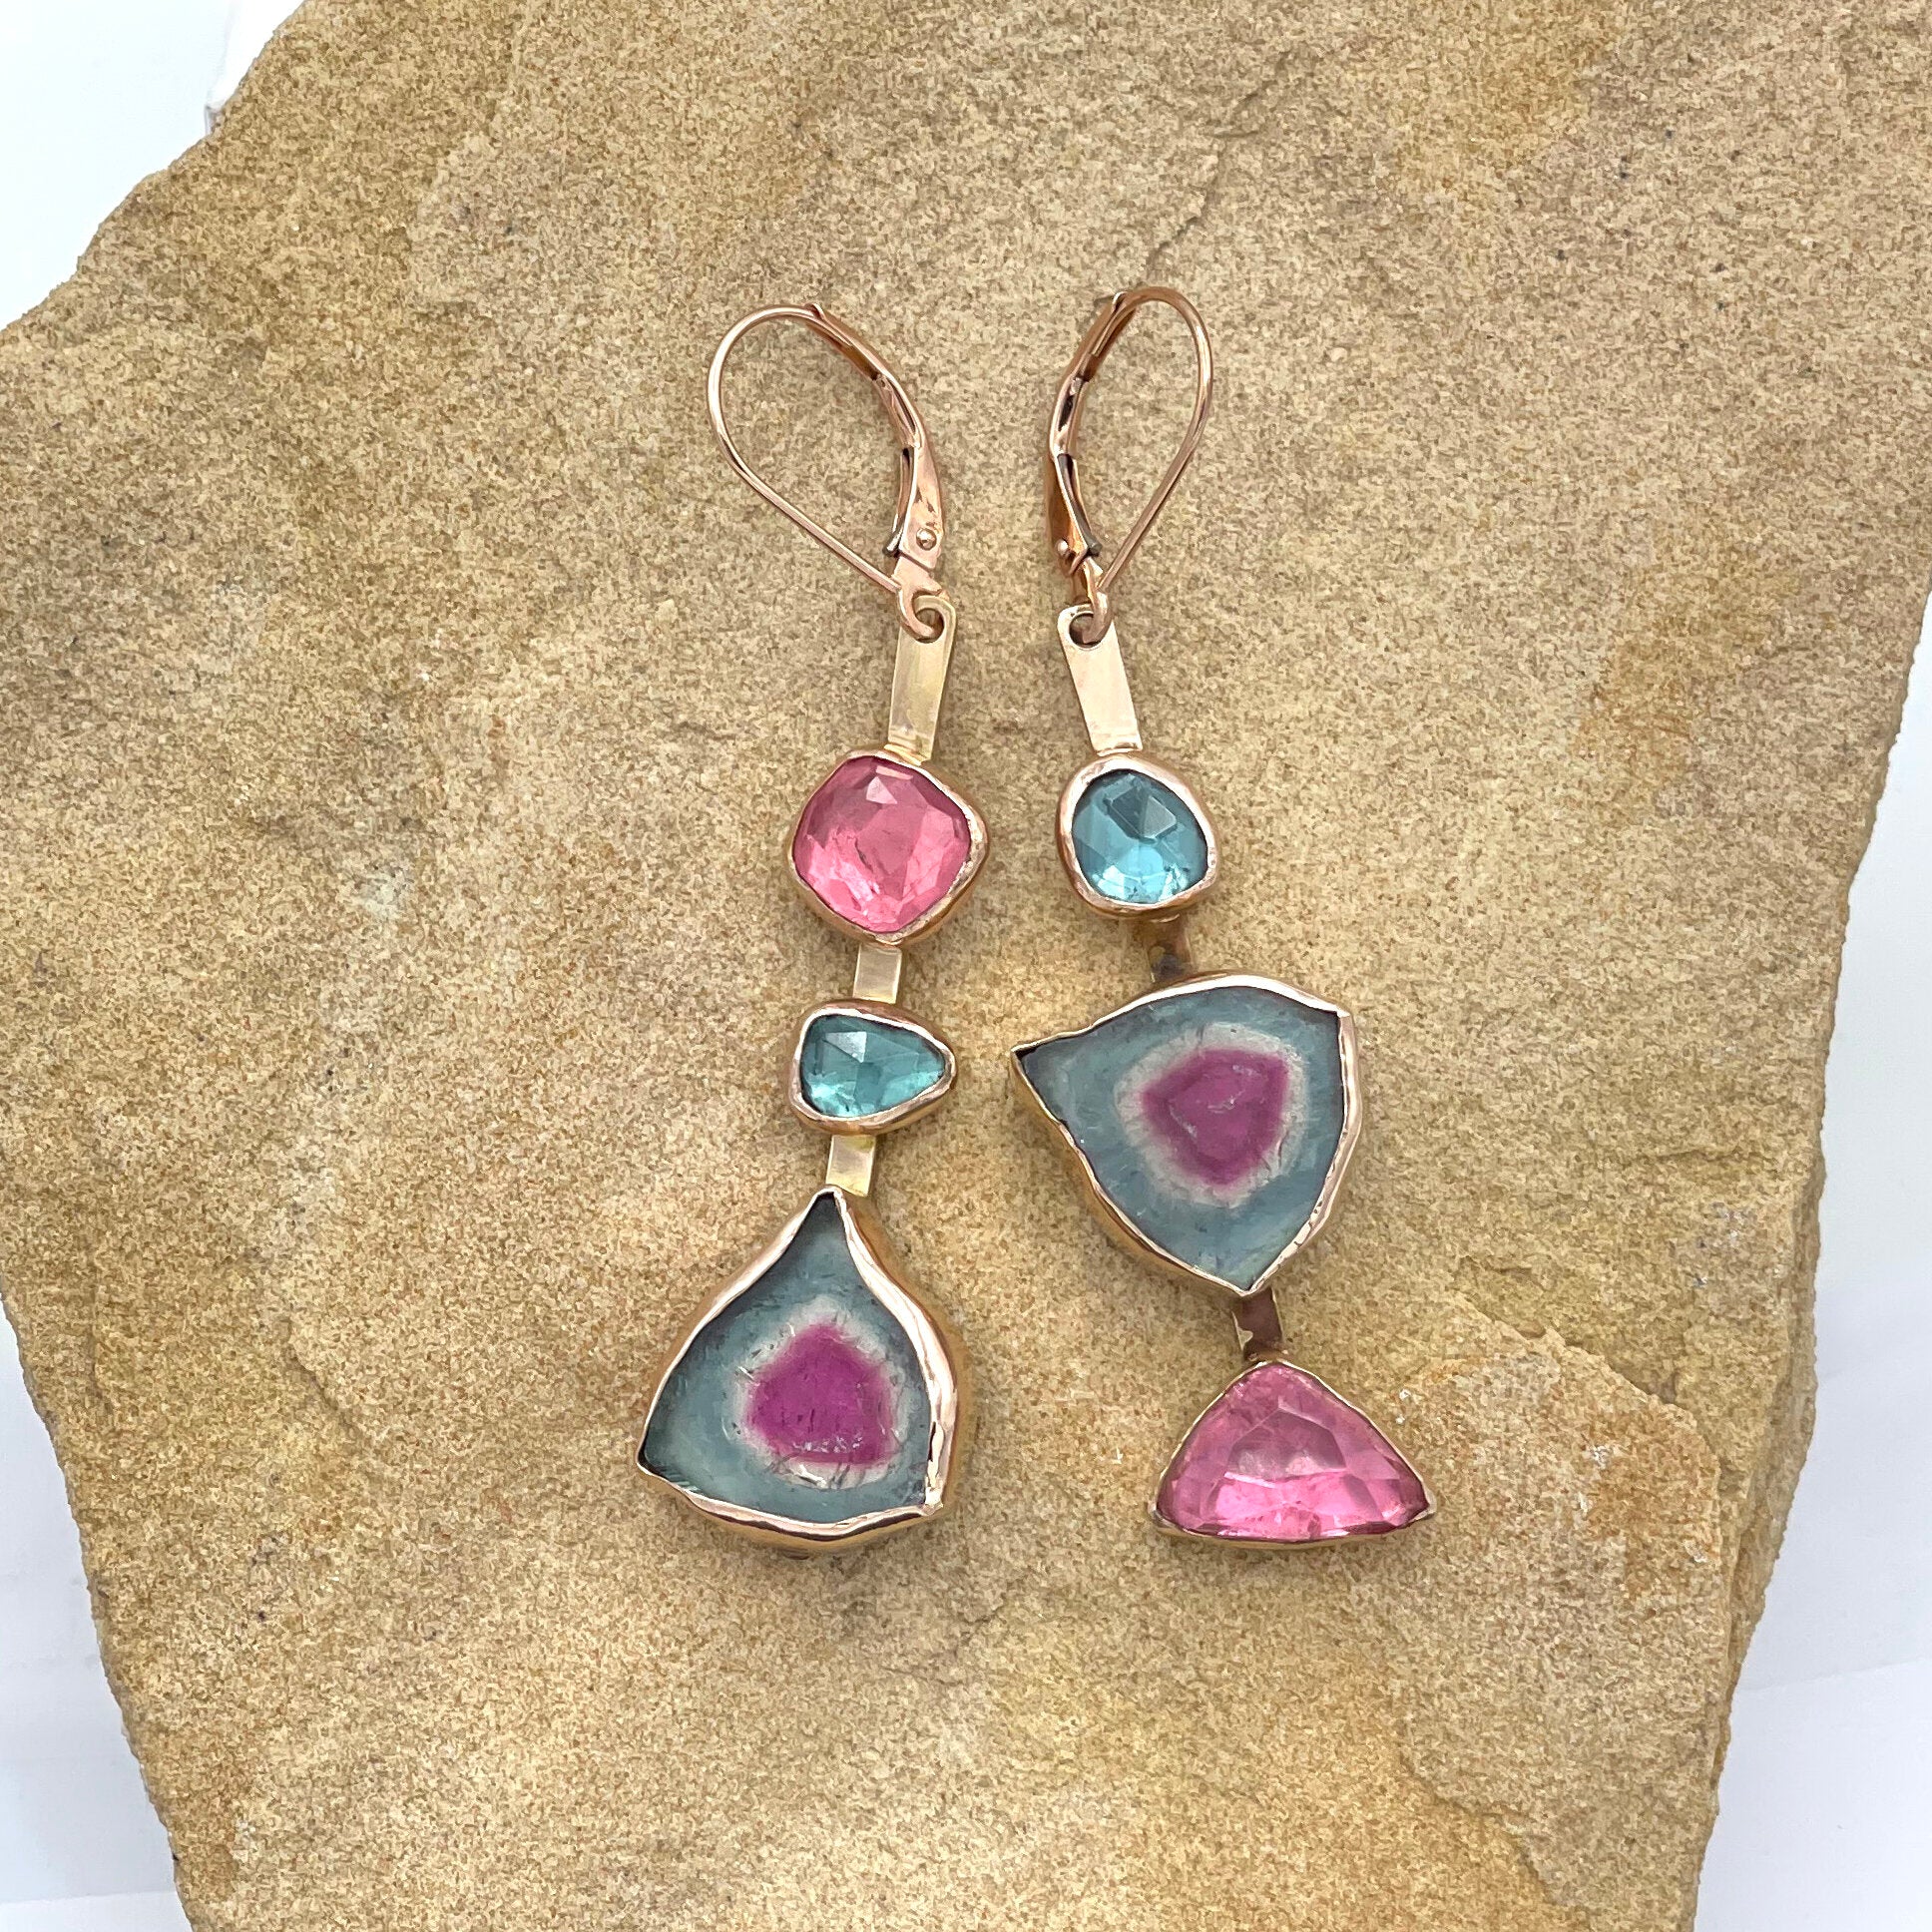 Pink Earrings for Girls with Geometric Design - Gold Plated Modern Earrings  - Gift for Girls - Pastel Pyramids Long Earrings by Blingvine